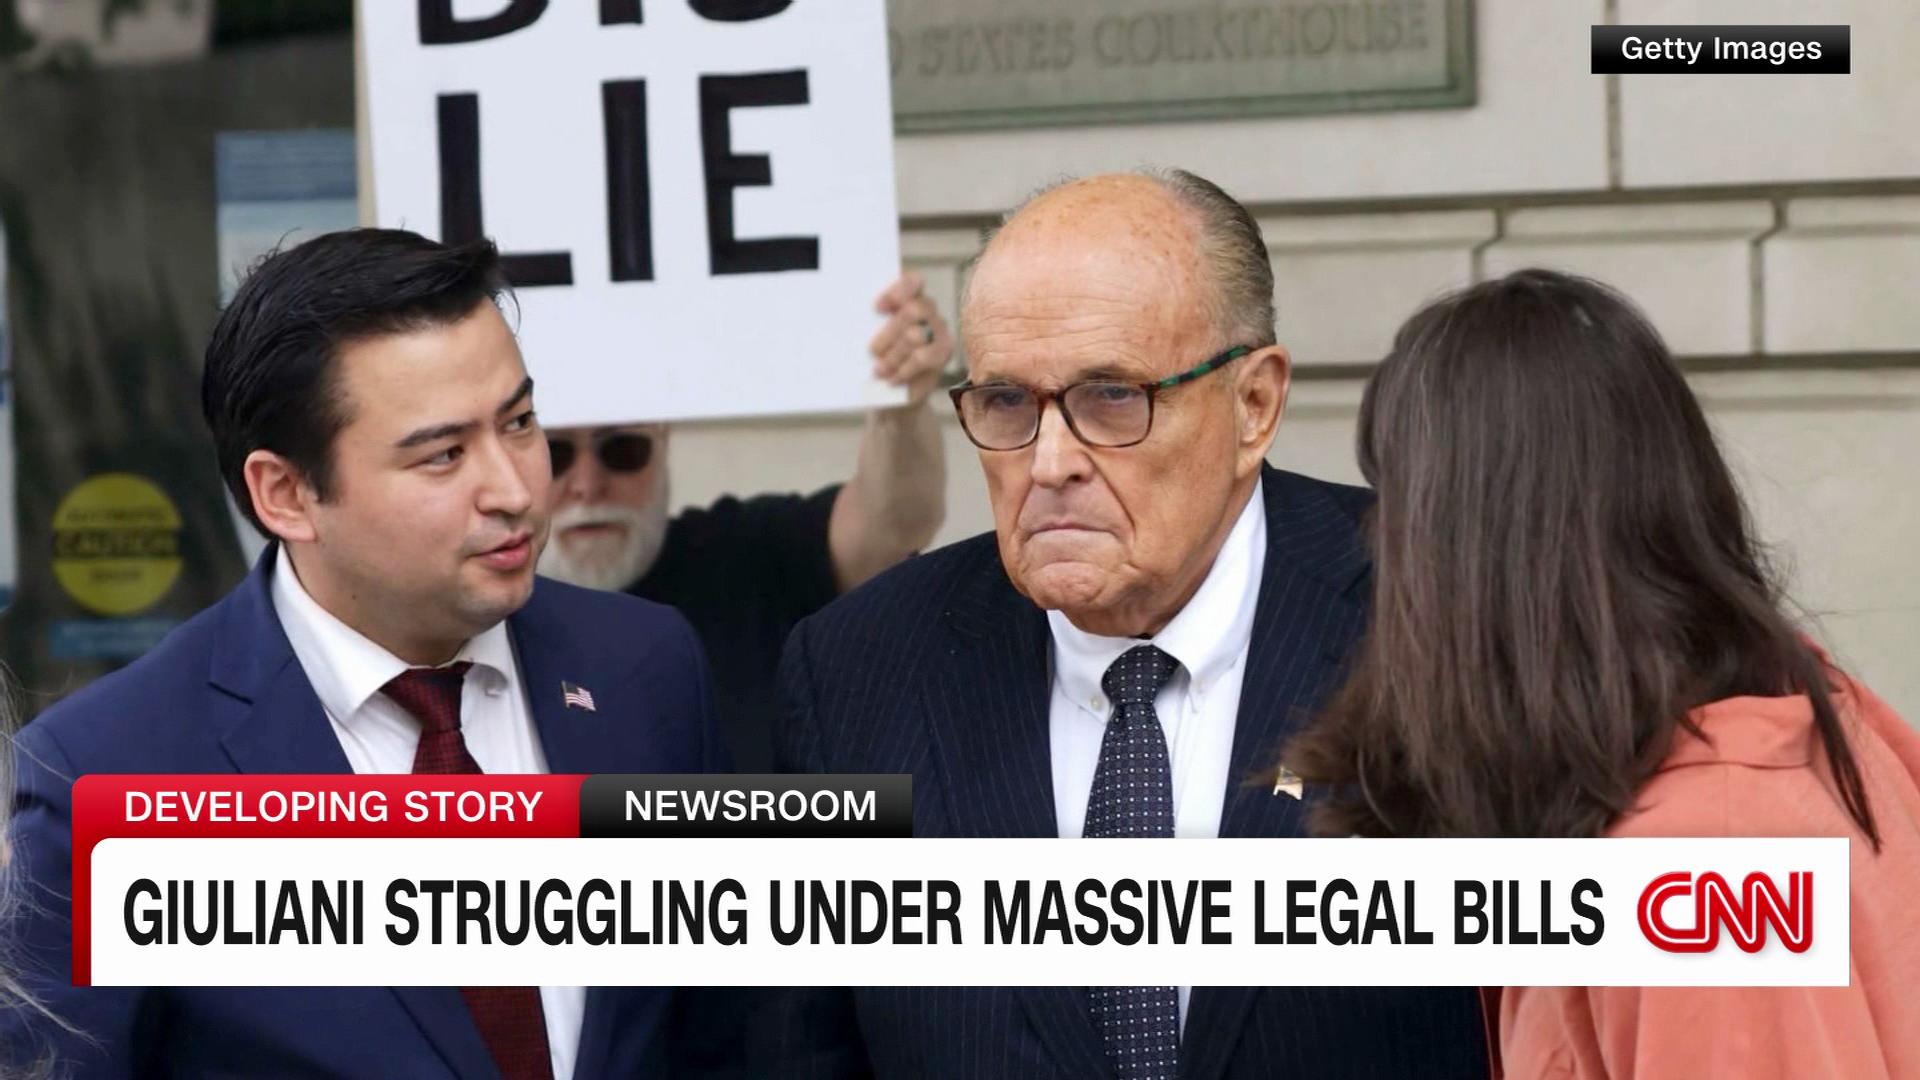 Giuliani struggling under massive legal bills after defending Trump (cnn.com)